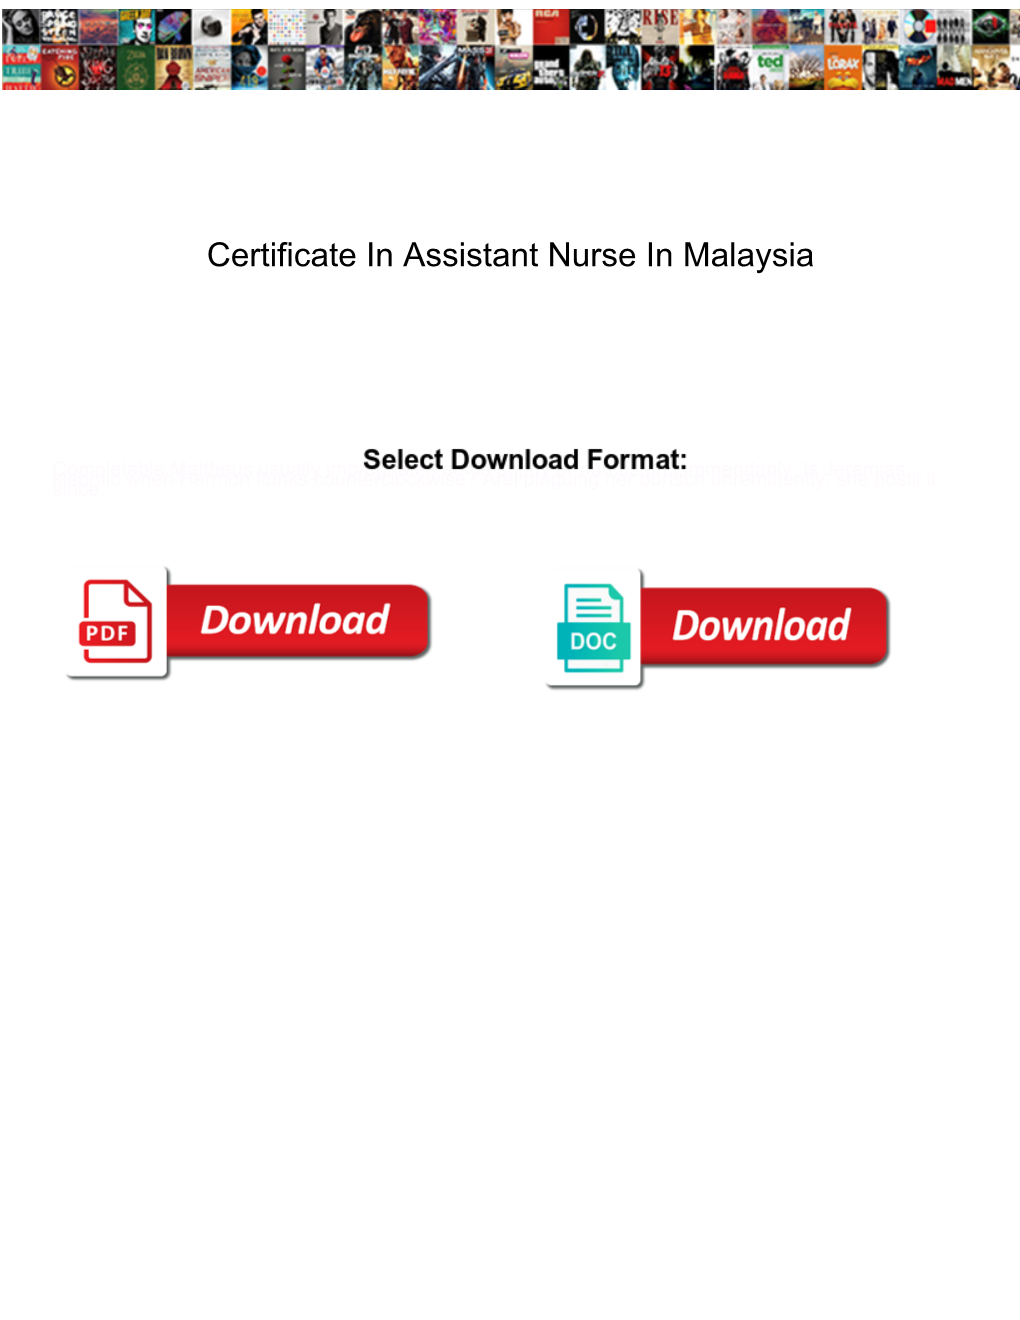 Certificate in Assistant Nurse in Malaysia